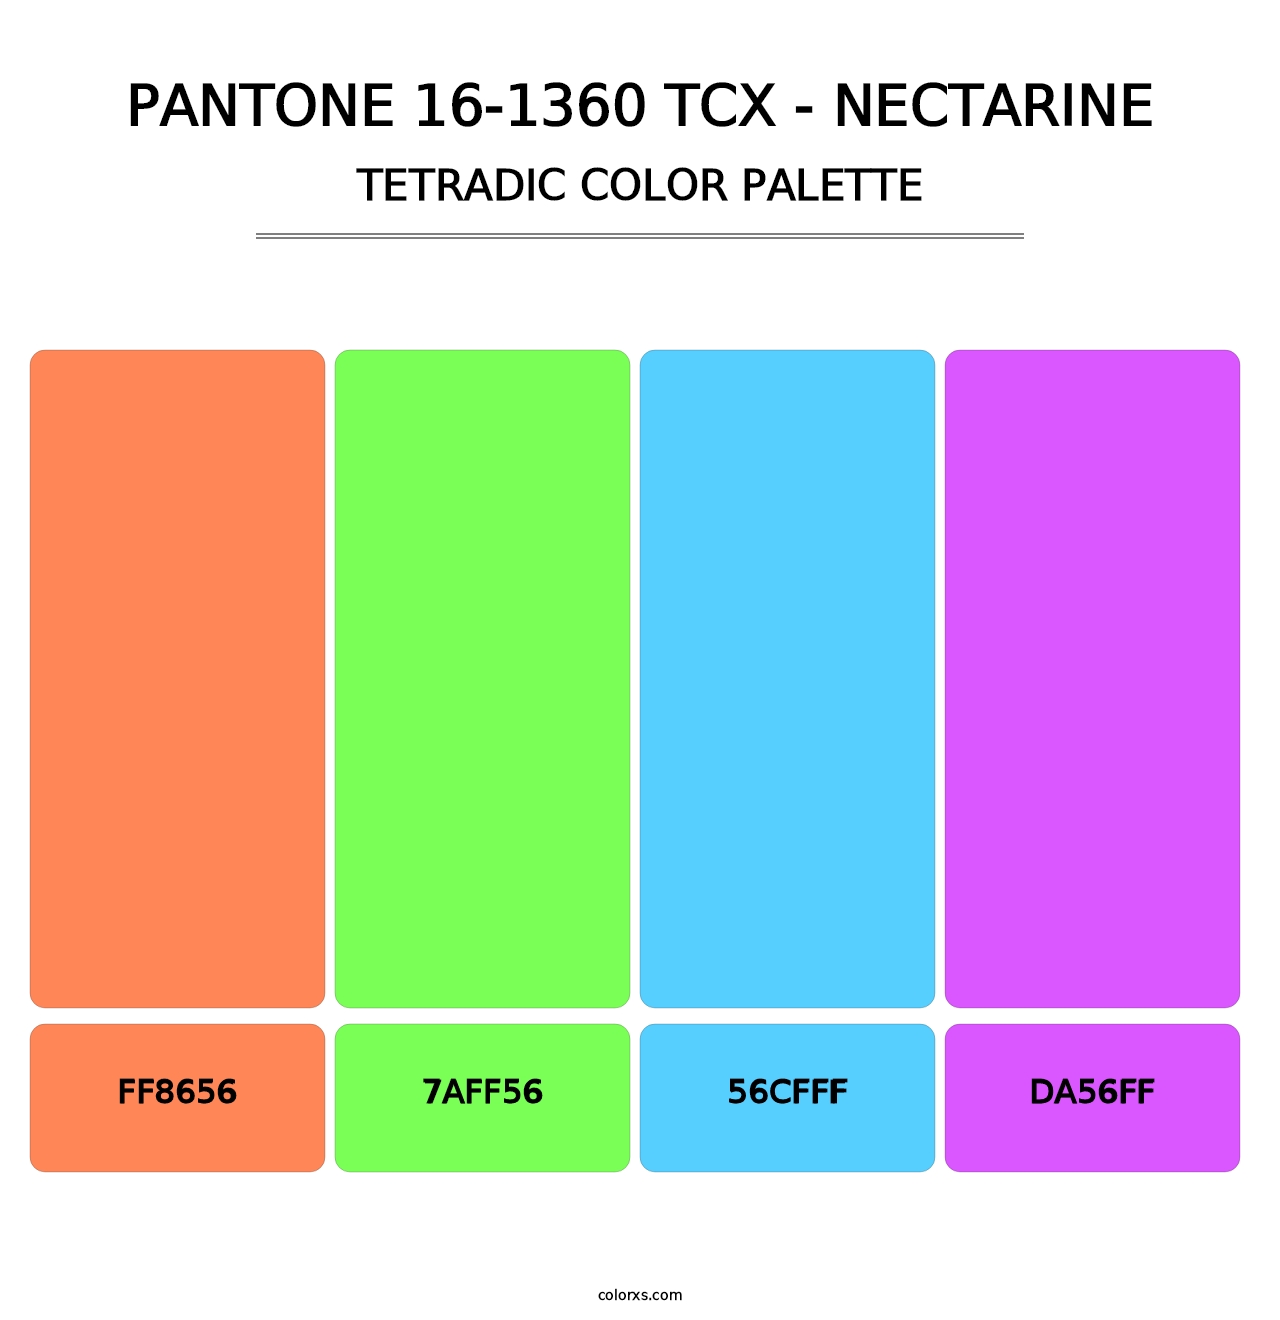 PANTONE 16-1360 TCX - Nectarine - Tetradic Color Palette